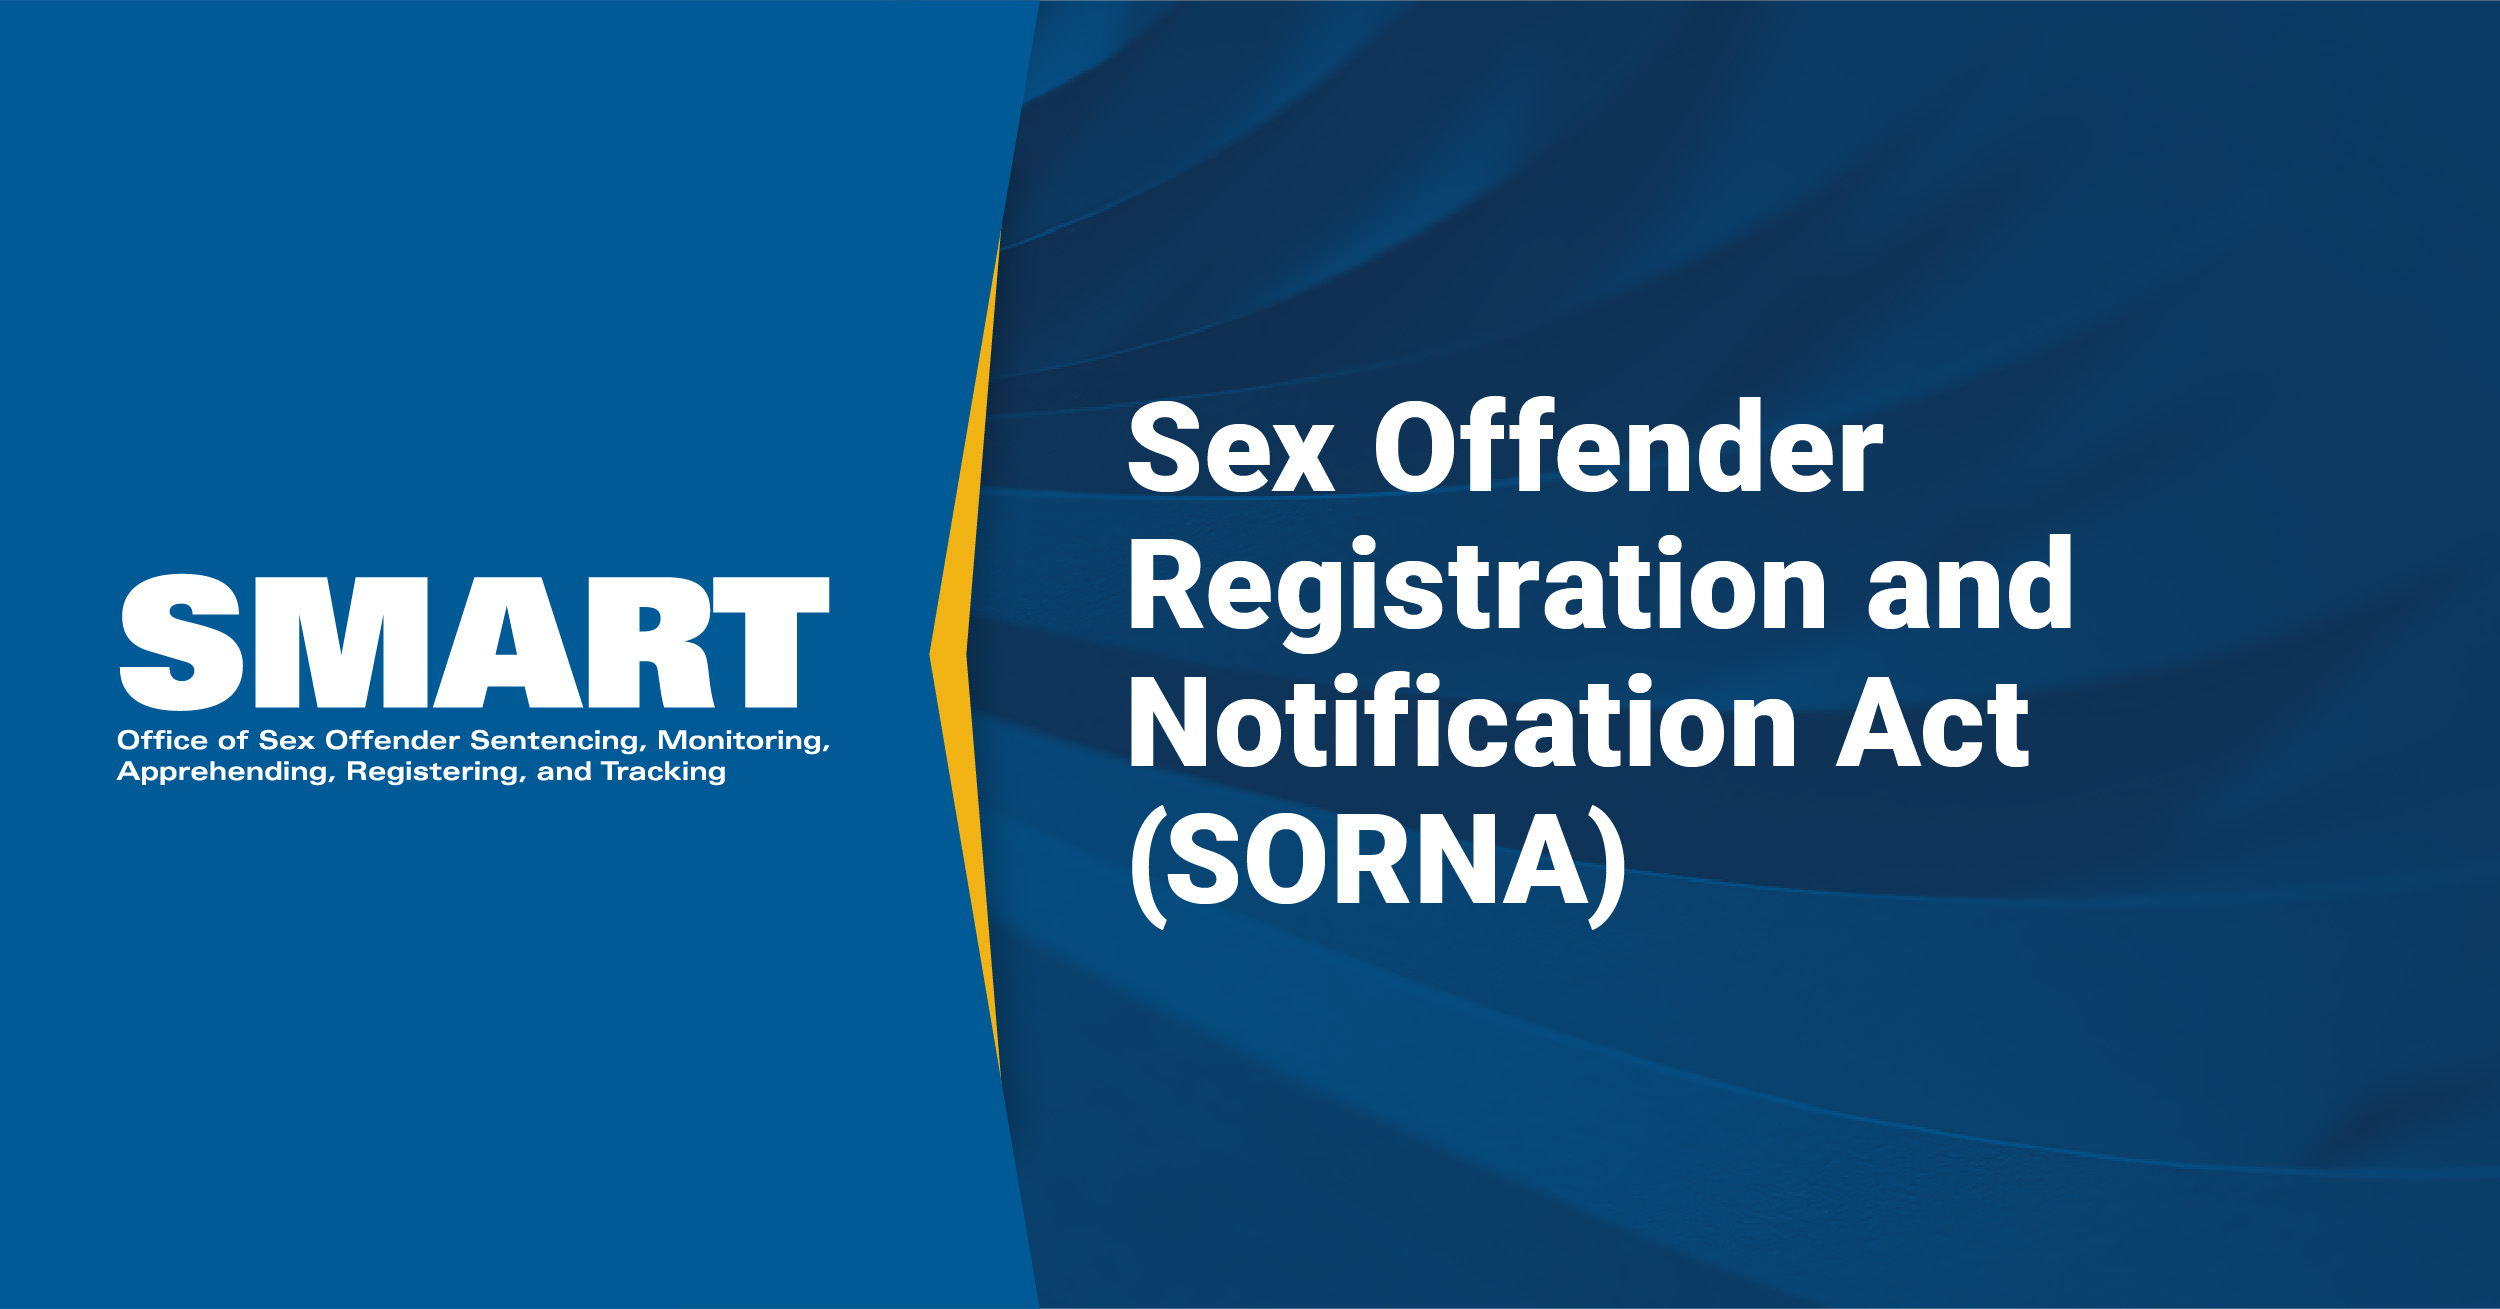 Sorna Implementation Status Office Of Sex Offender Sentencing Monitoring Apprehending 1118